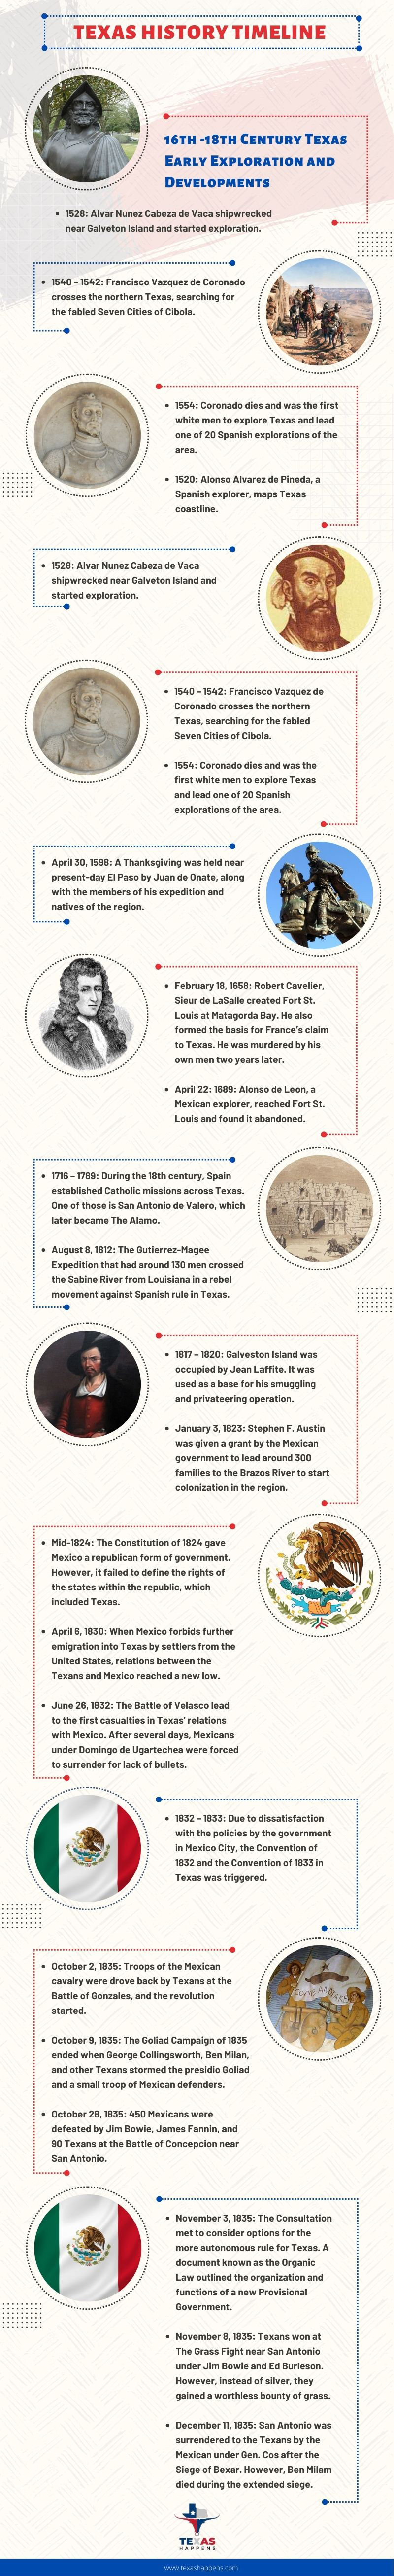 Texas History Timeline